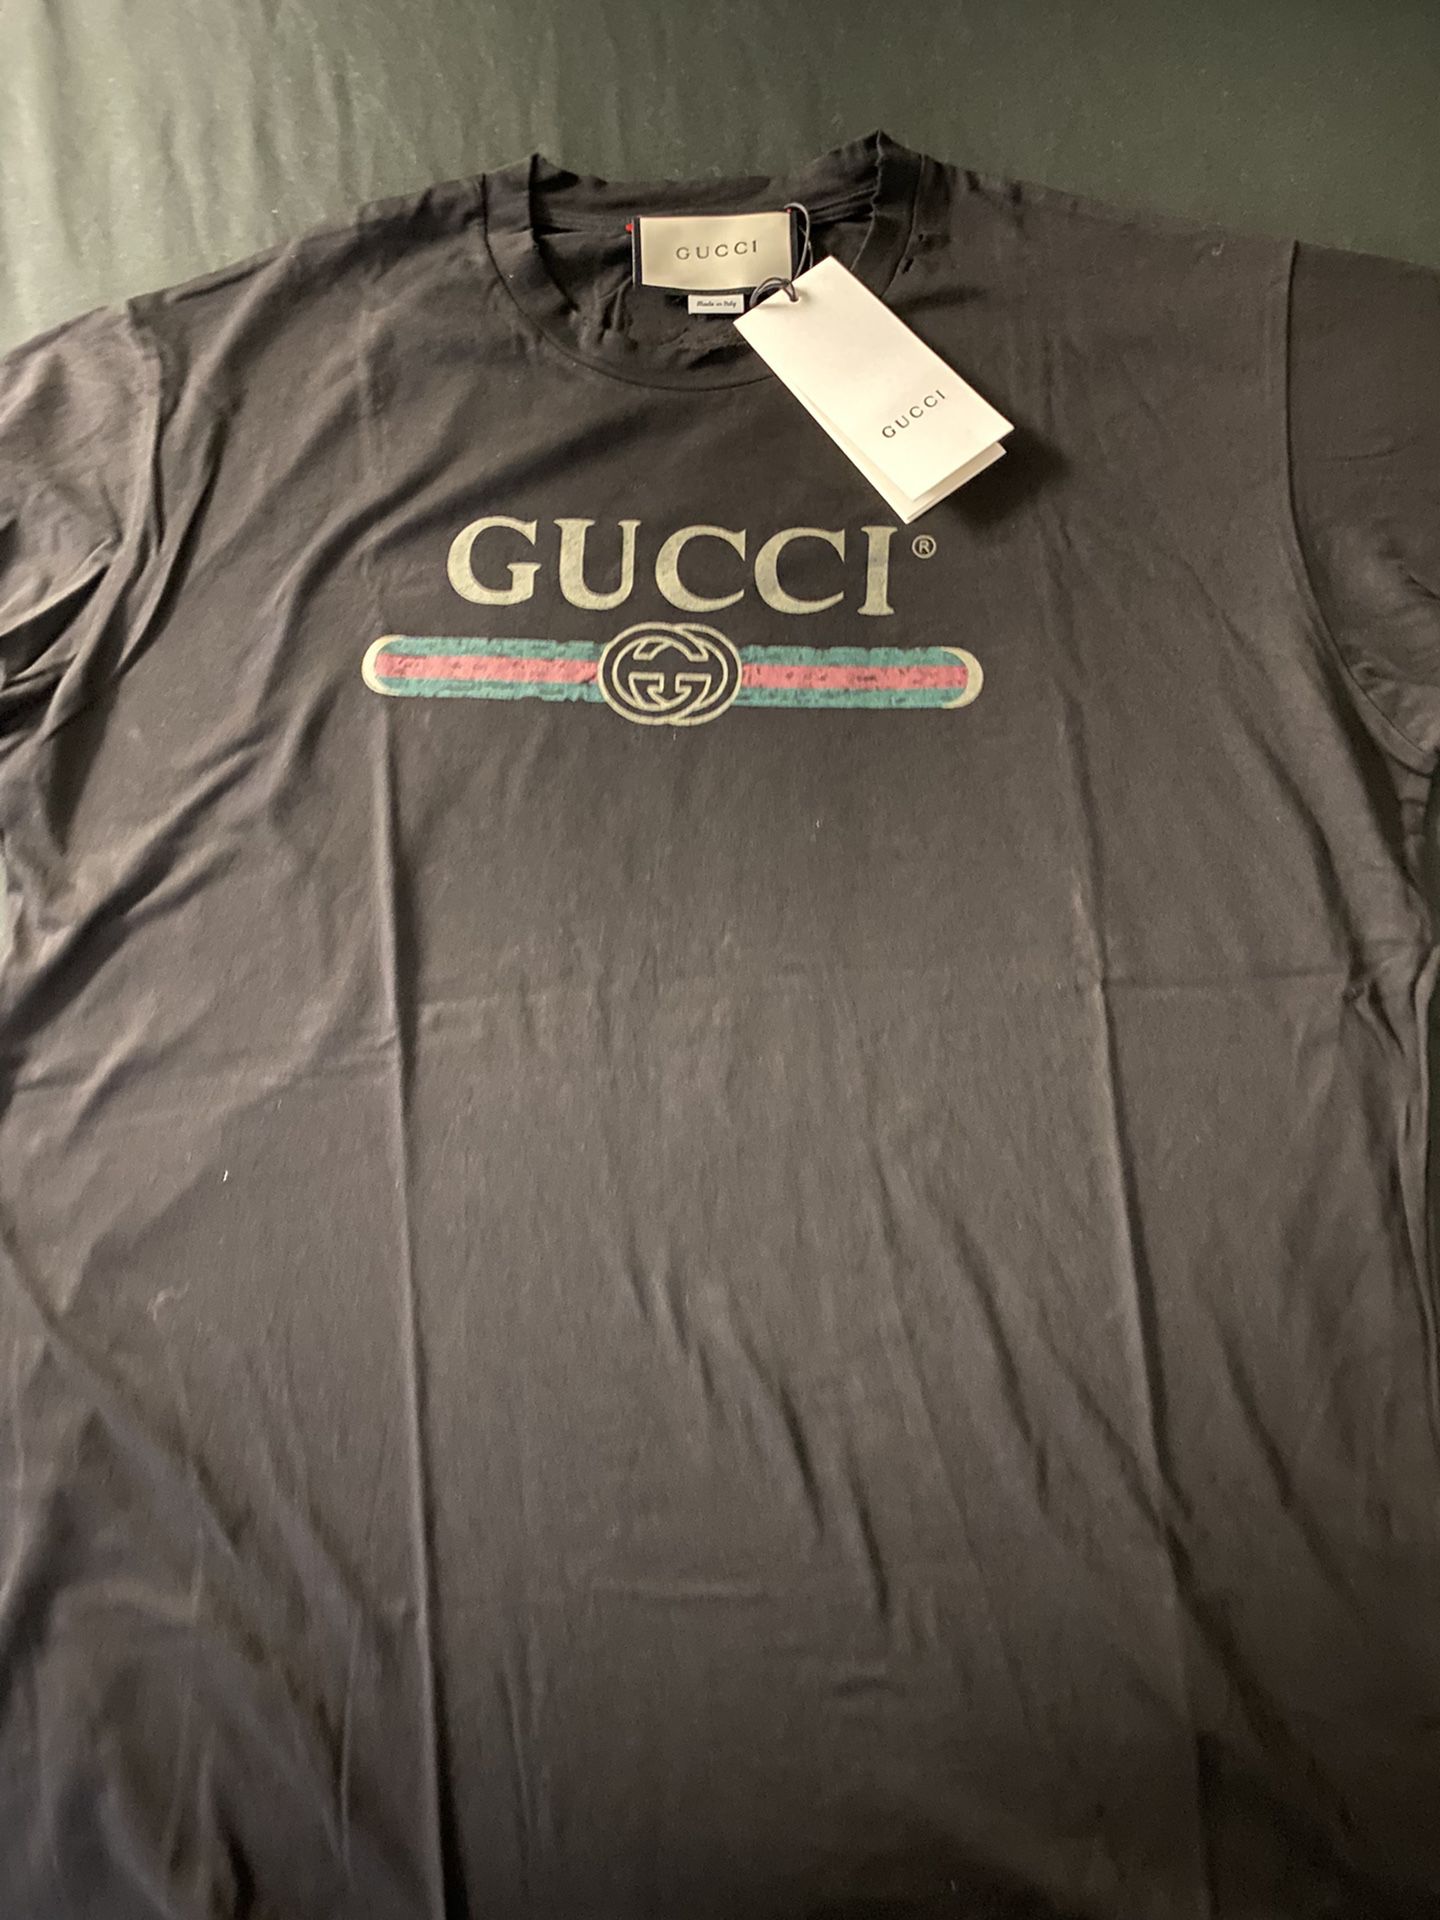 Authentic Gucci Ladies Shirt Size Large